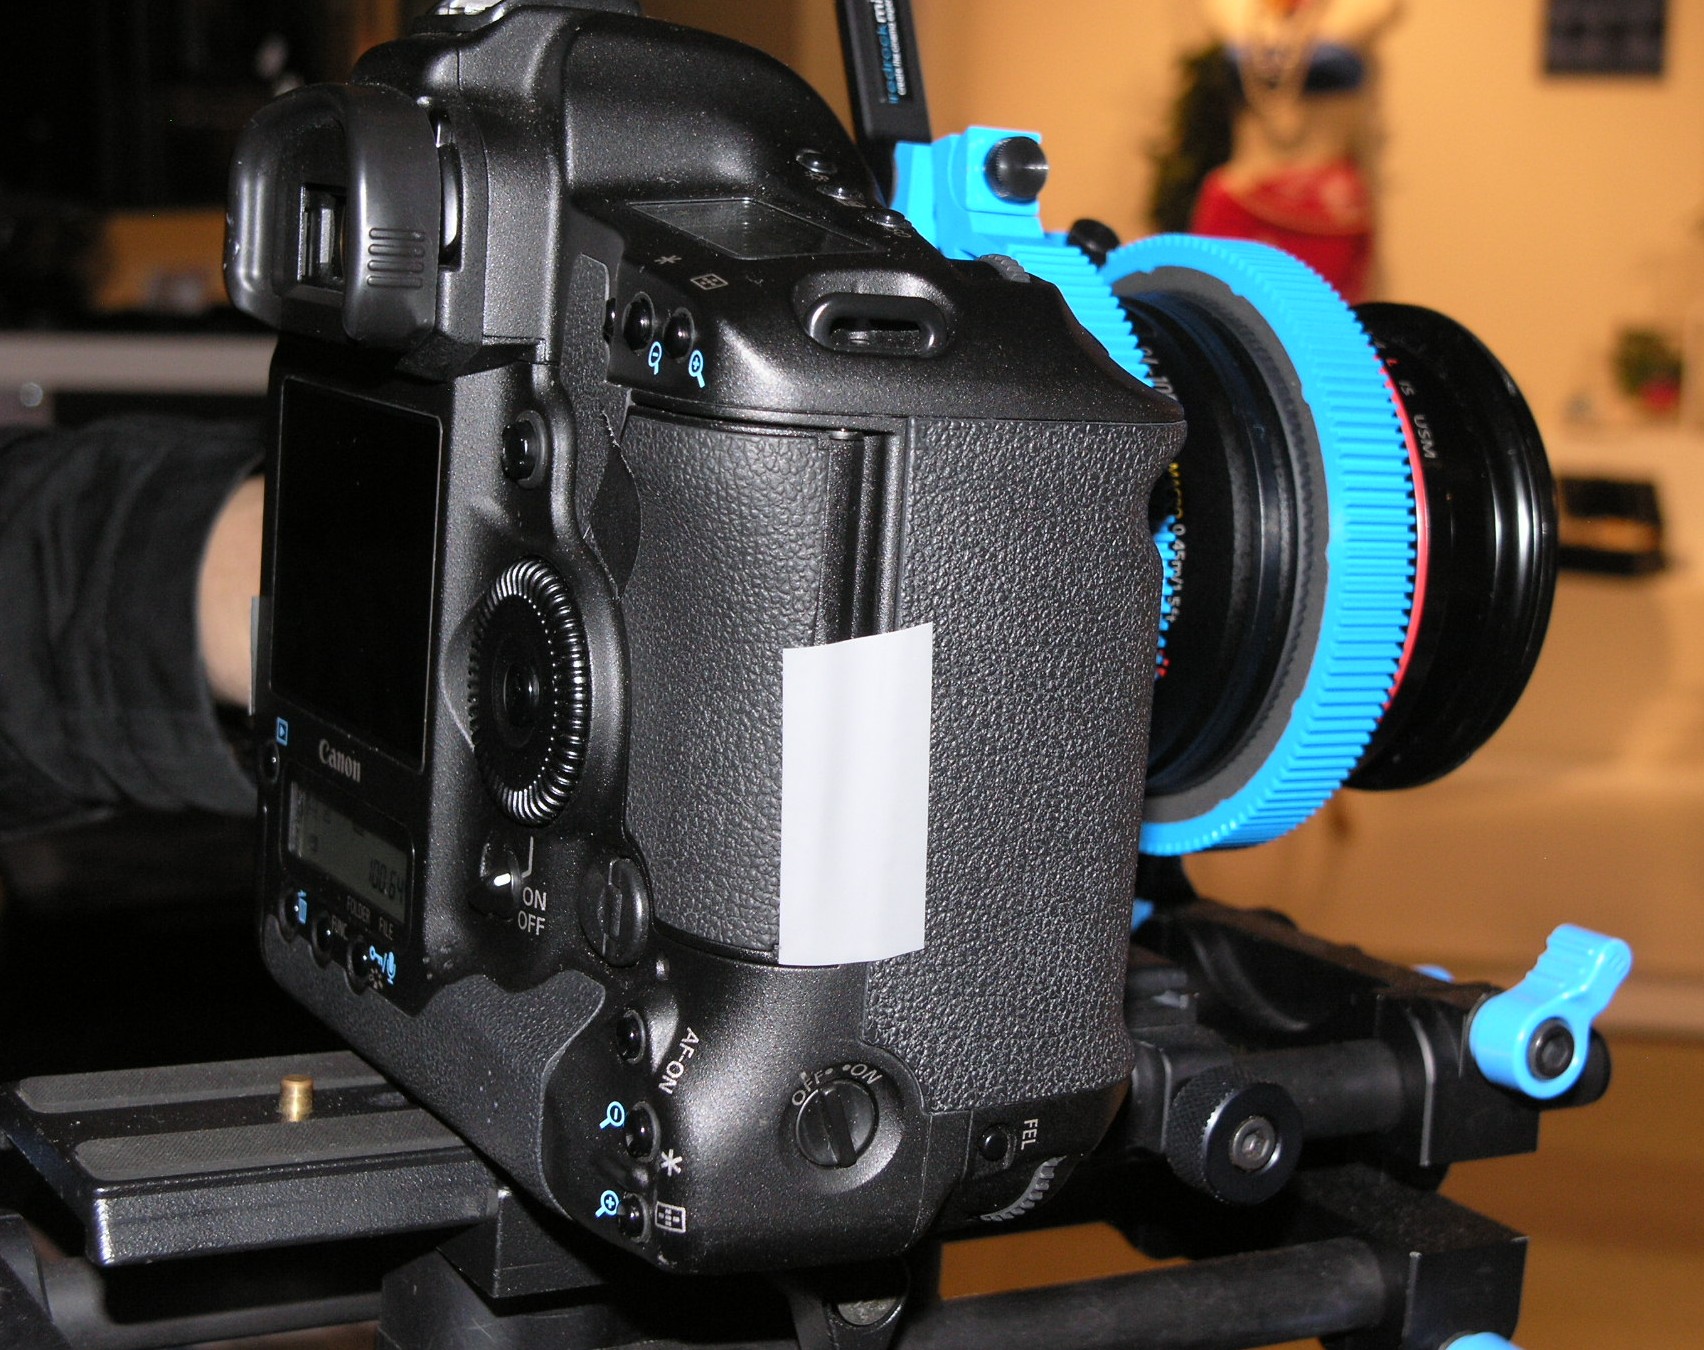 SLR movie camera from Canon.